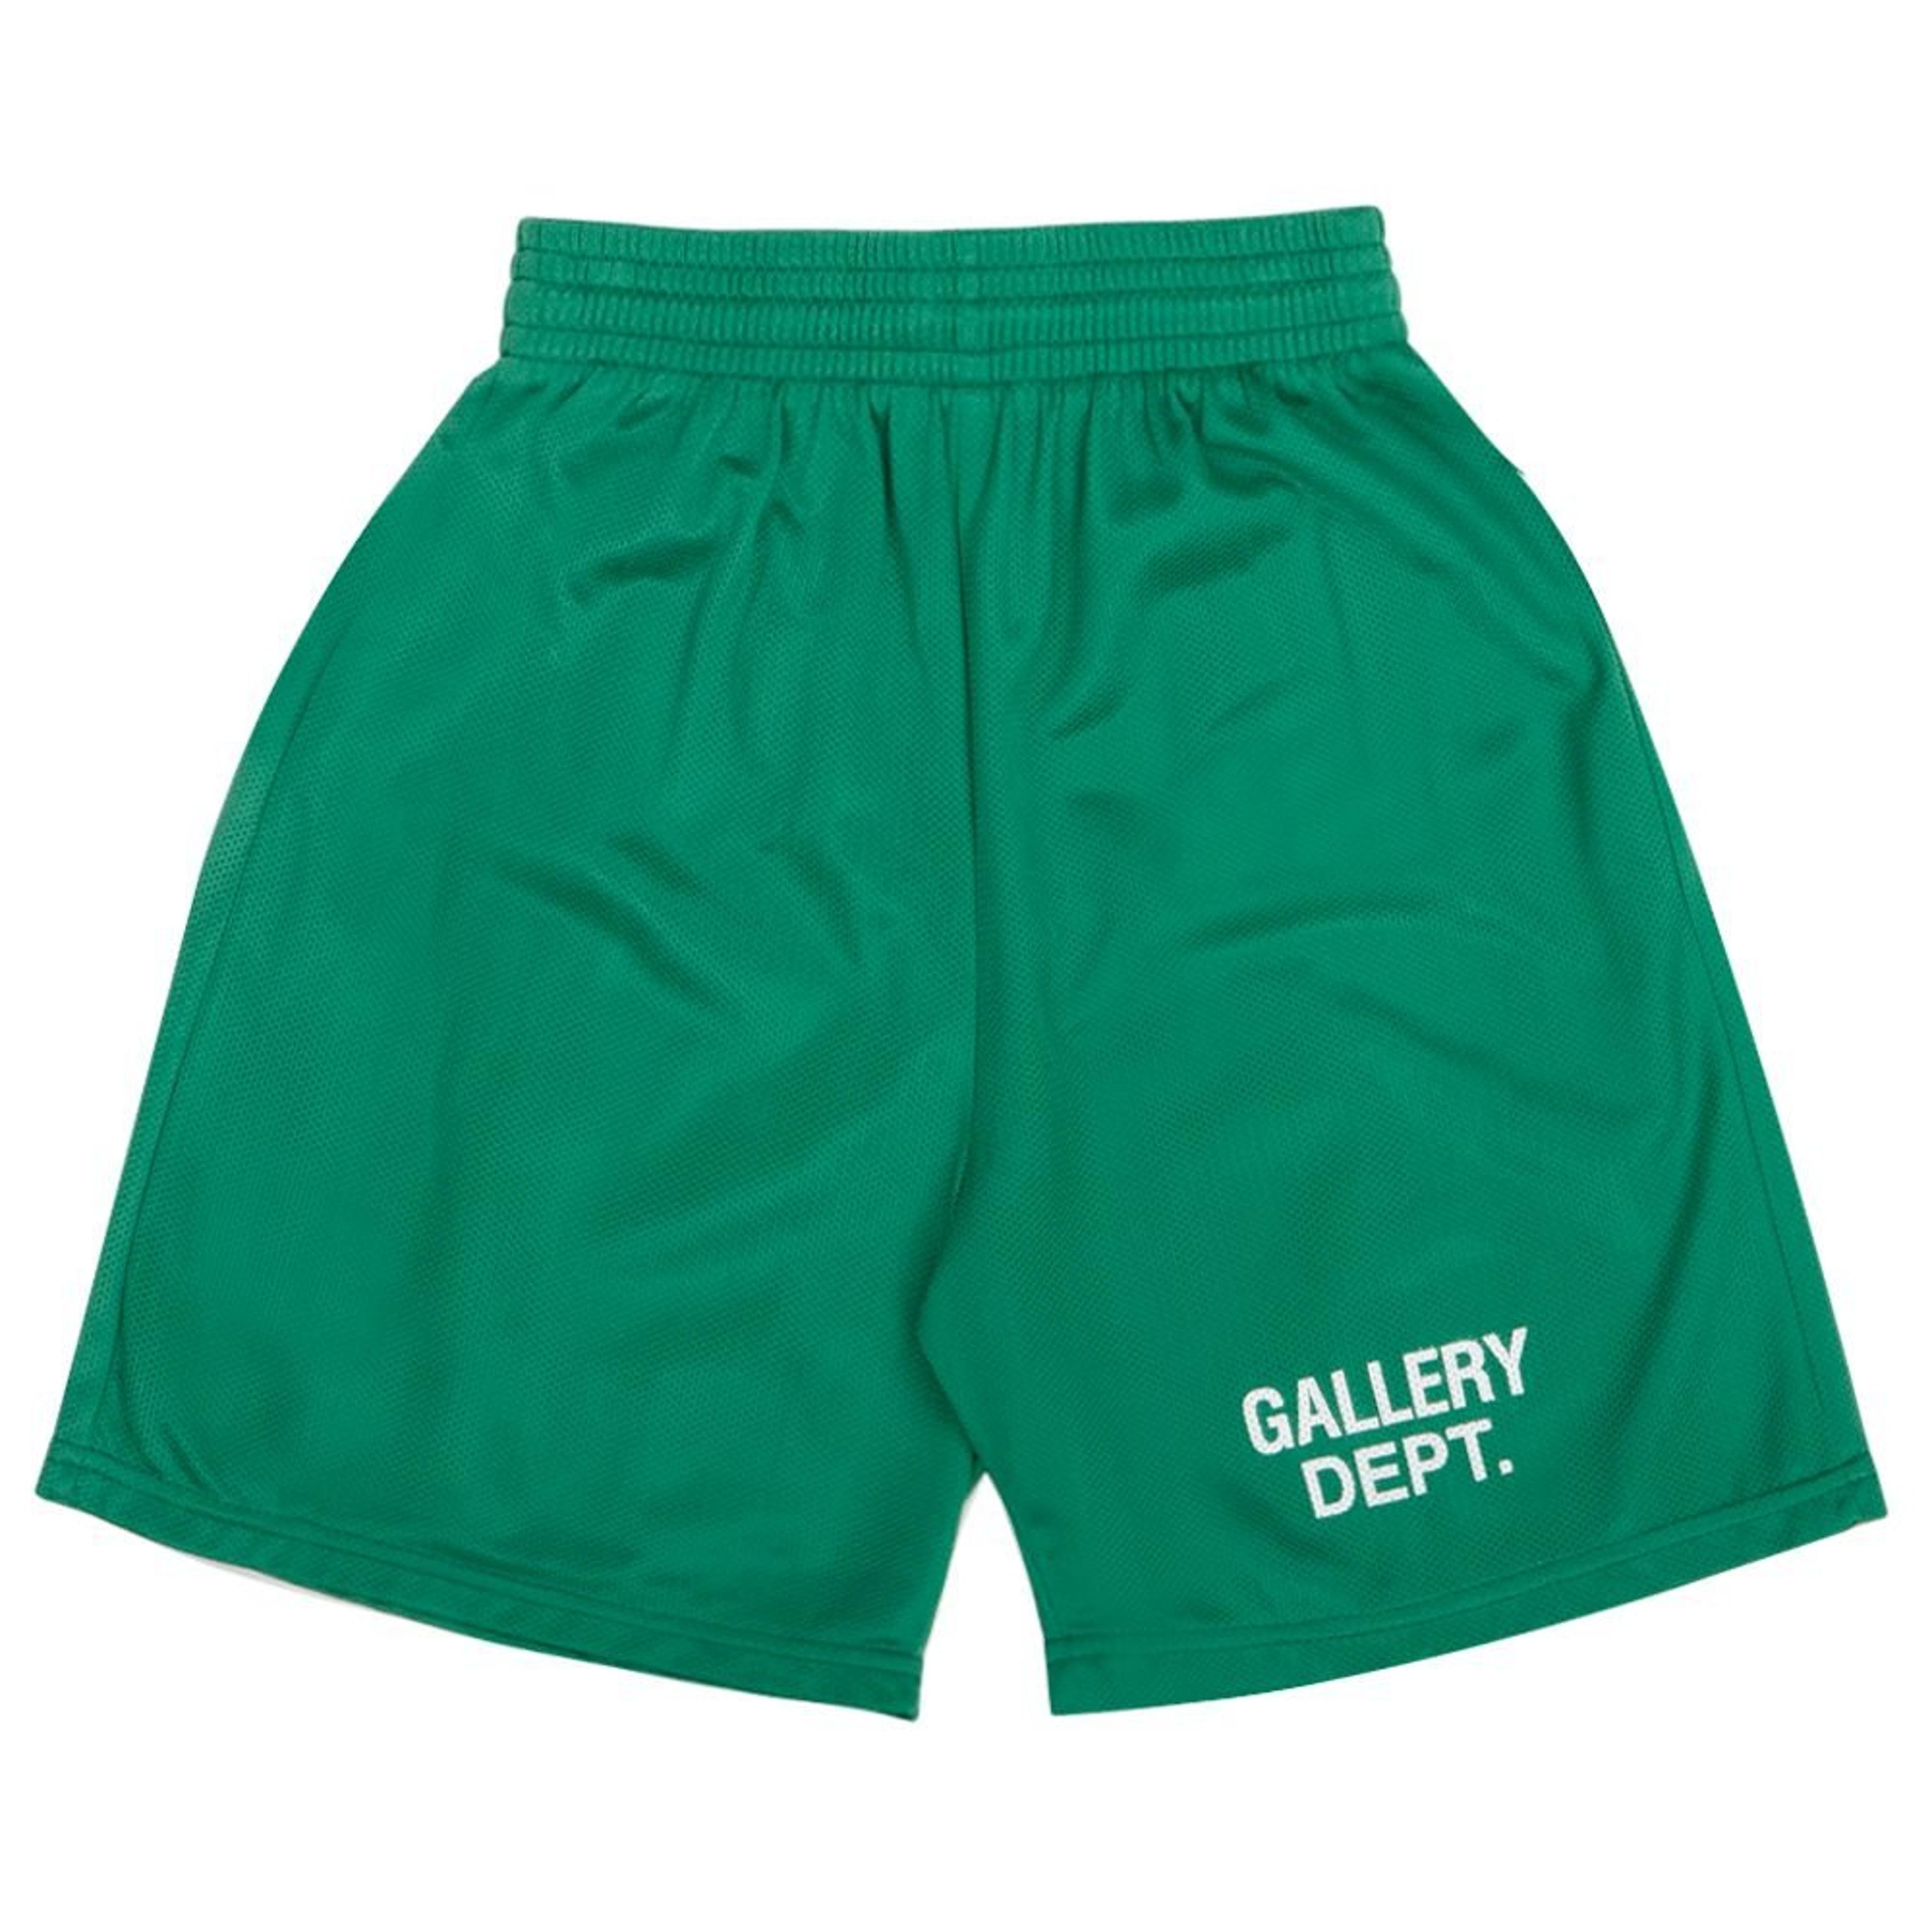 Gallery Dept. Studio Gym Shorts Green